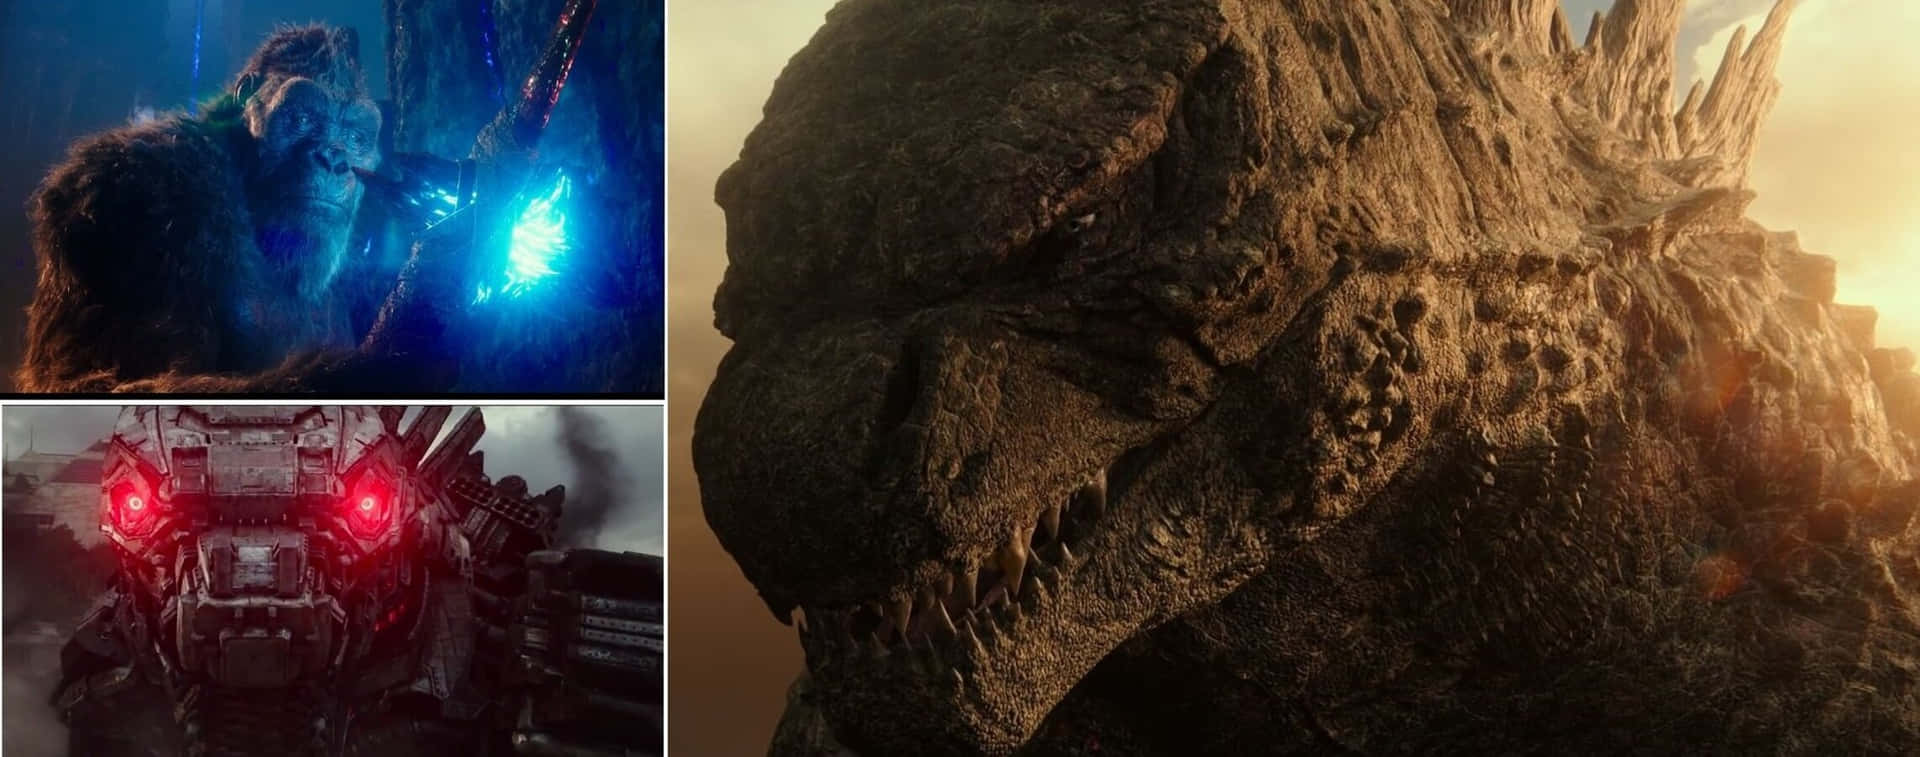 The Mighty Robot Godzilla Unleashed Wallpaper